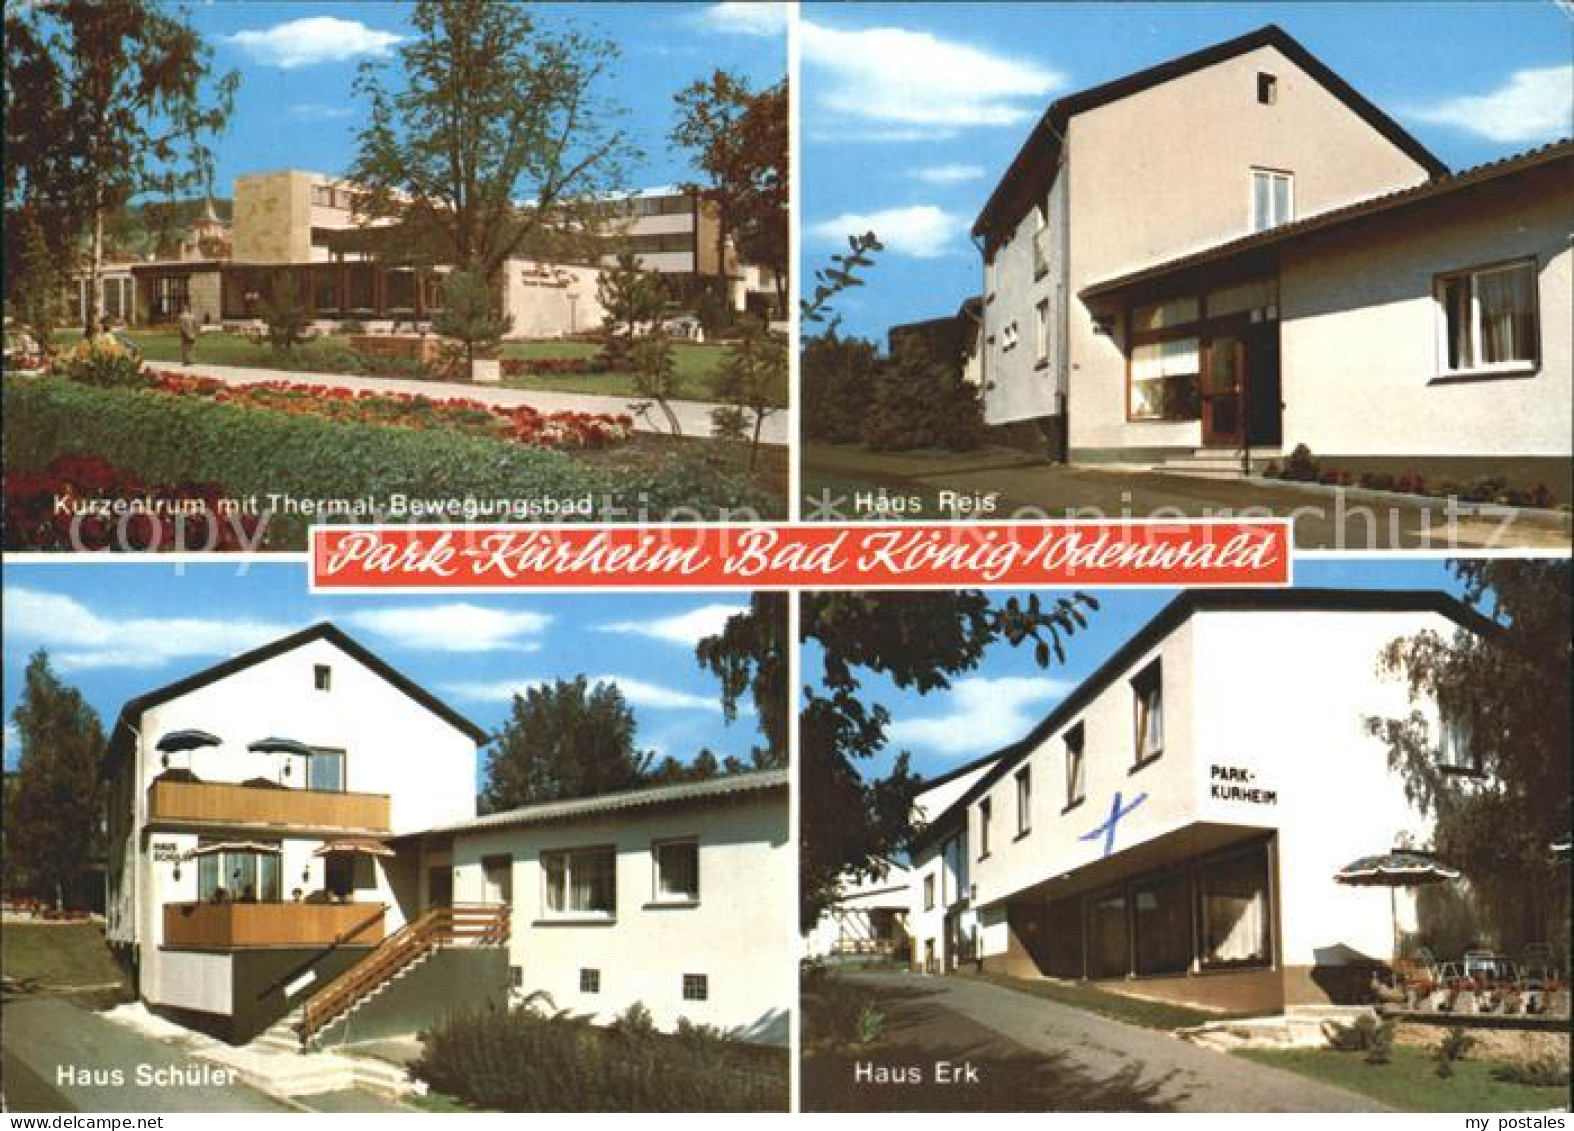 72289333 Bad Koenig Odenwald Kurzentrum Thermal-Bewegungsbad Haus Reis Haus Erk  - Bad Koenig